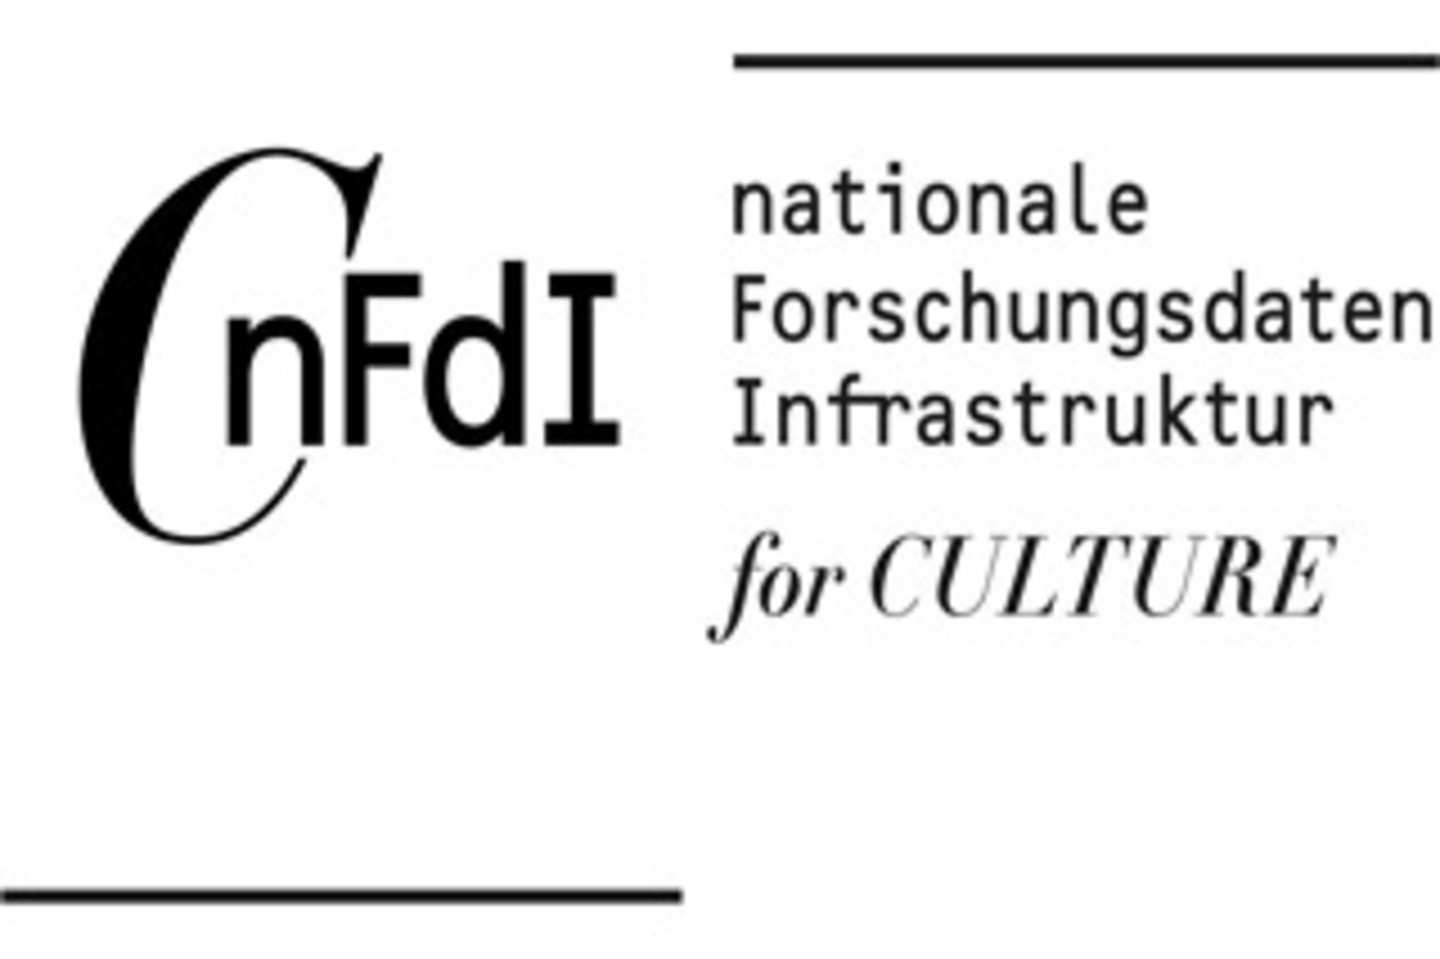 Das Logo des Projektes CnFdI: nationale Forschungsdaten Infrastruktur for Culture